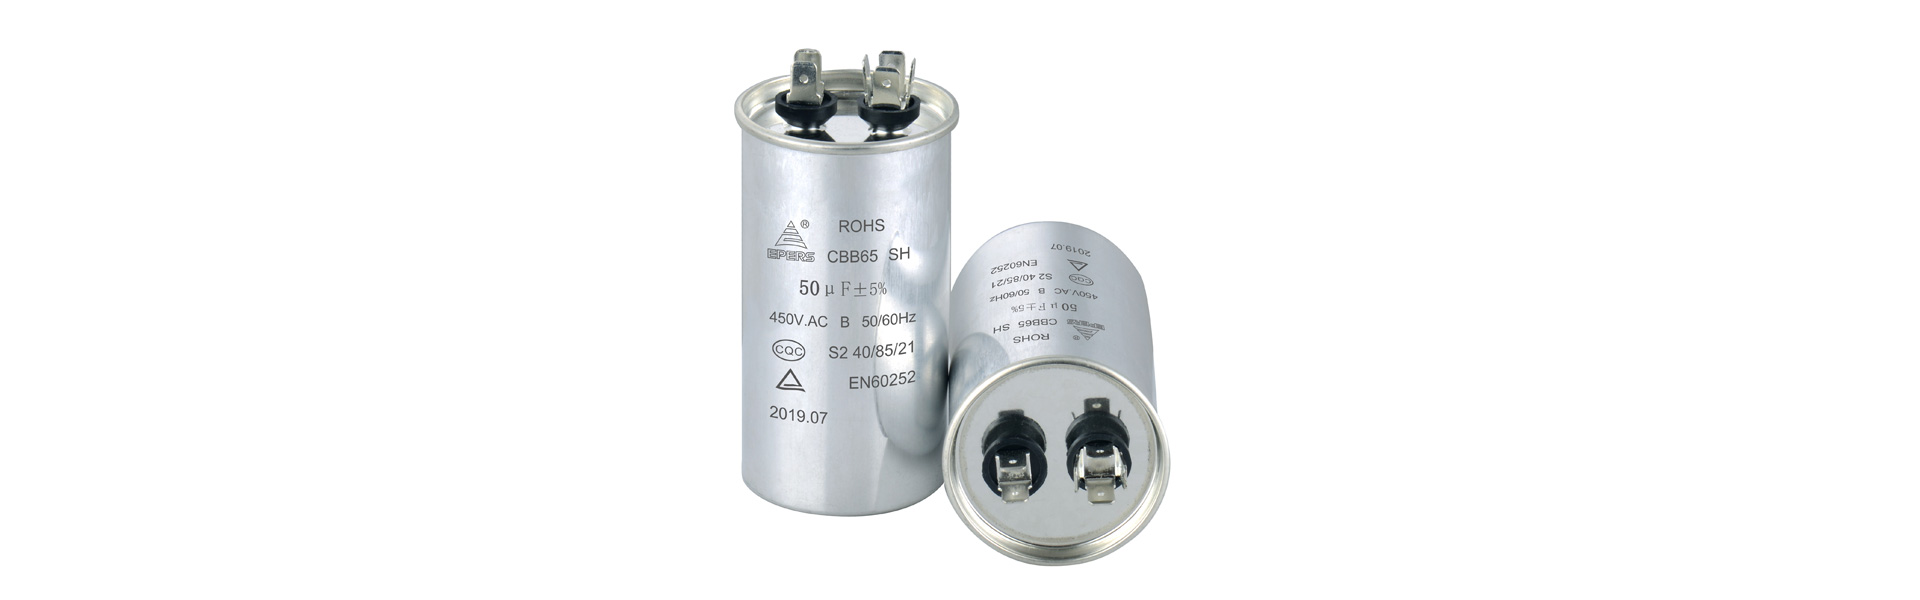 Kondensator-Kern, metallisierter Film, cbb61,Zhongshan Epers Electrical Appliances Co.,Ltd.